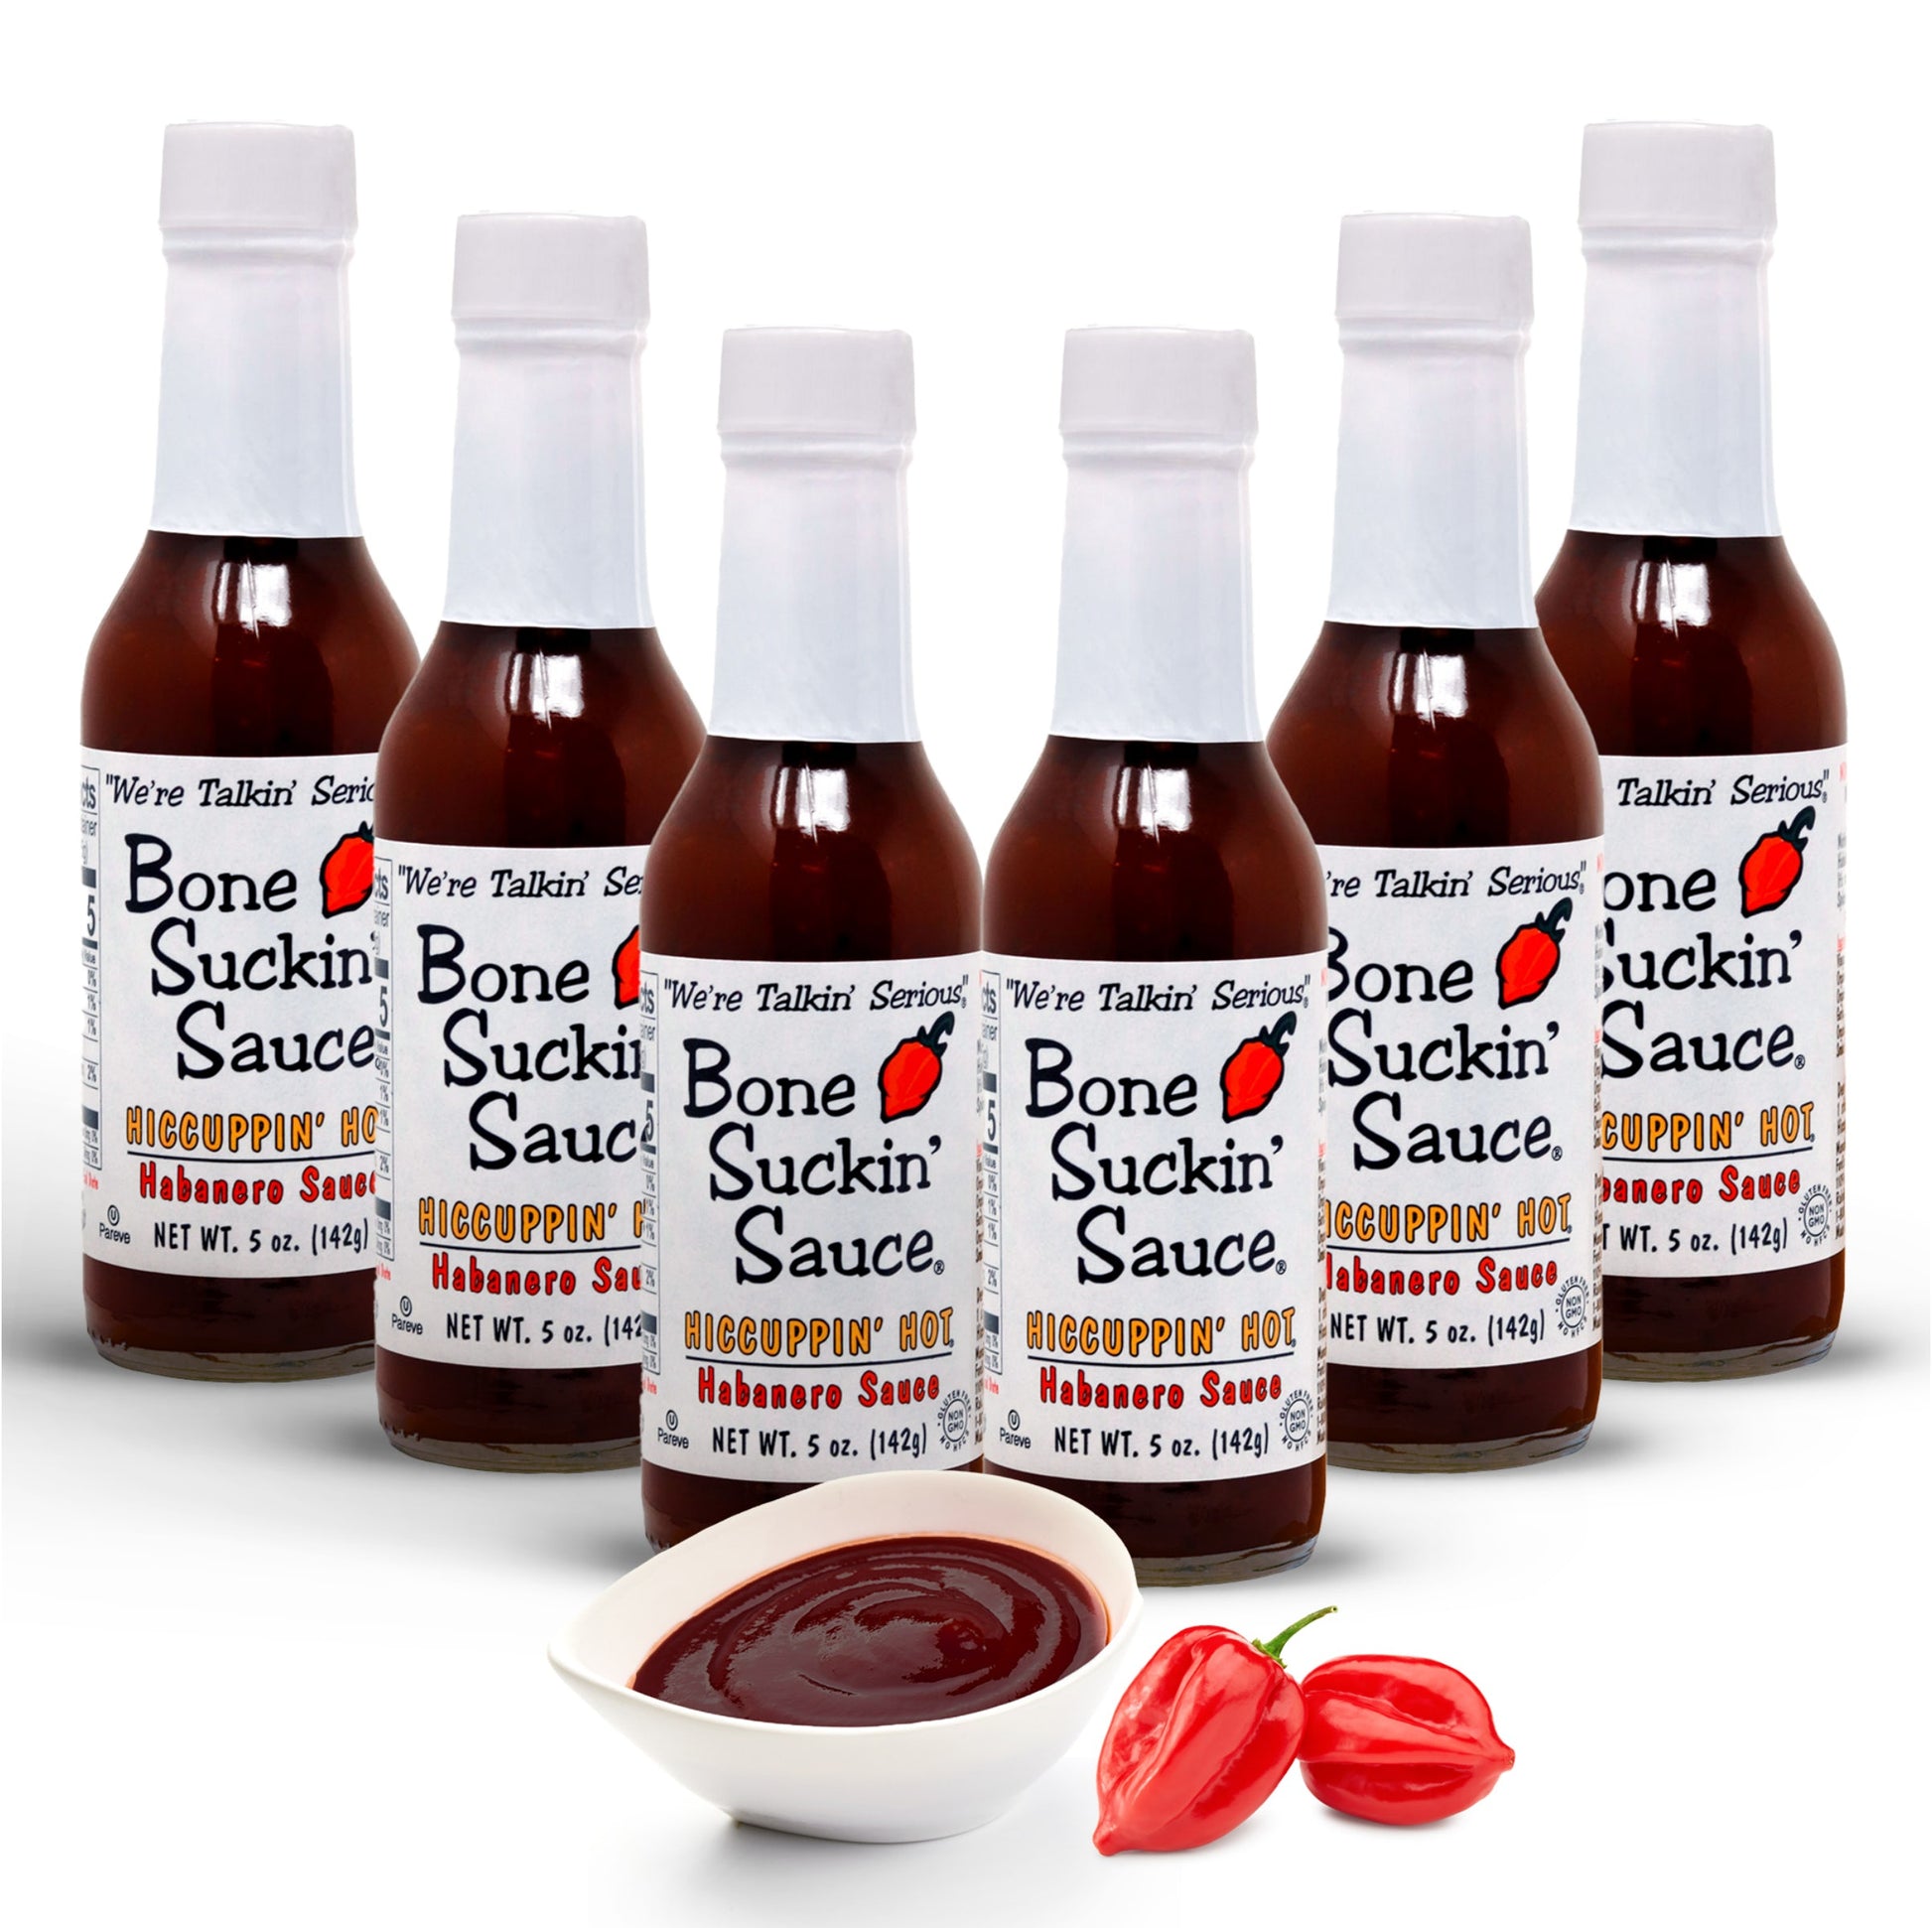 Bone Suckin'®, HICCUPPIN' Hot® Habanero Sauce, 5 oz., 6 pack